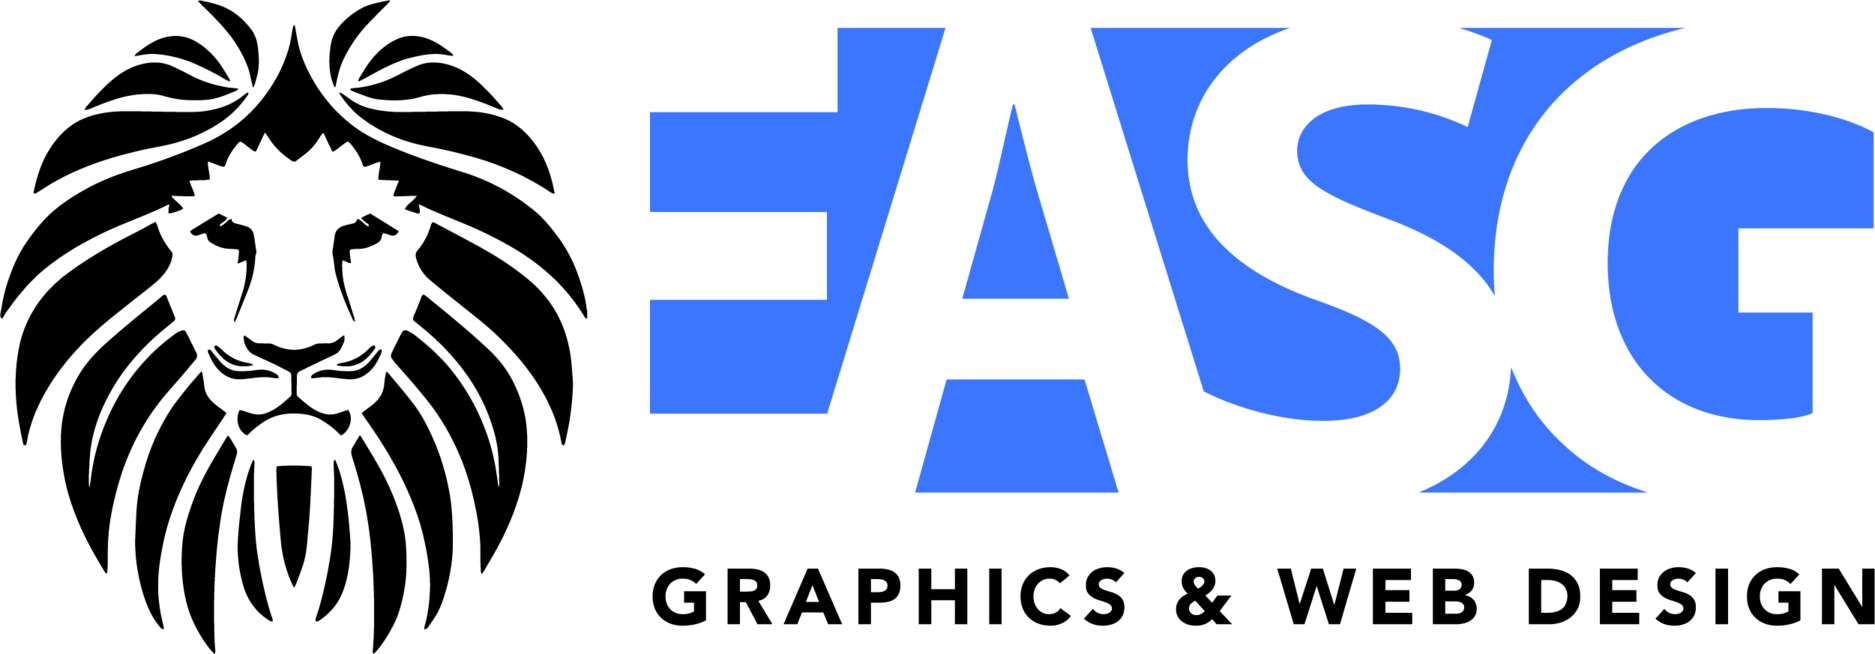 EASG GRAPHICS & WEB DESIGN